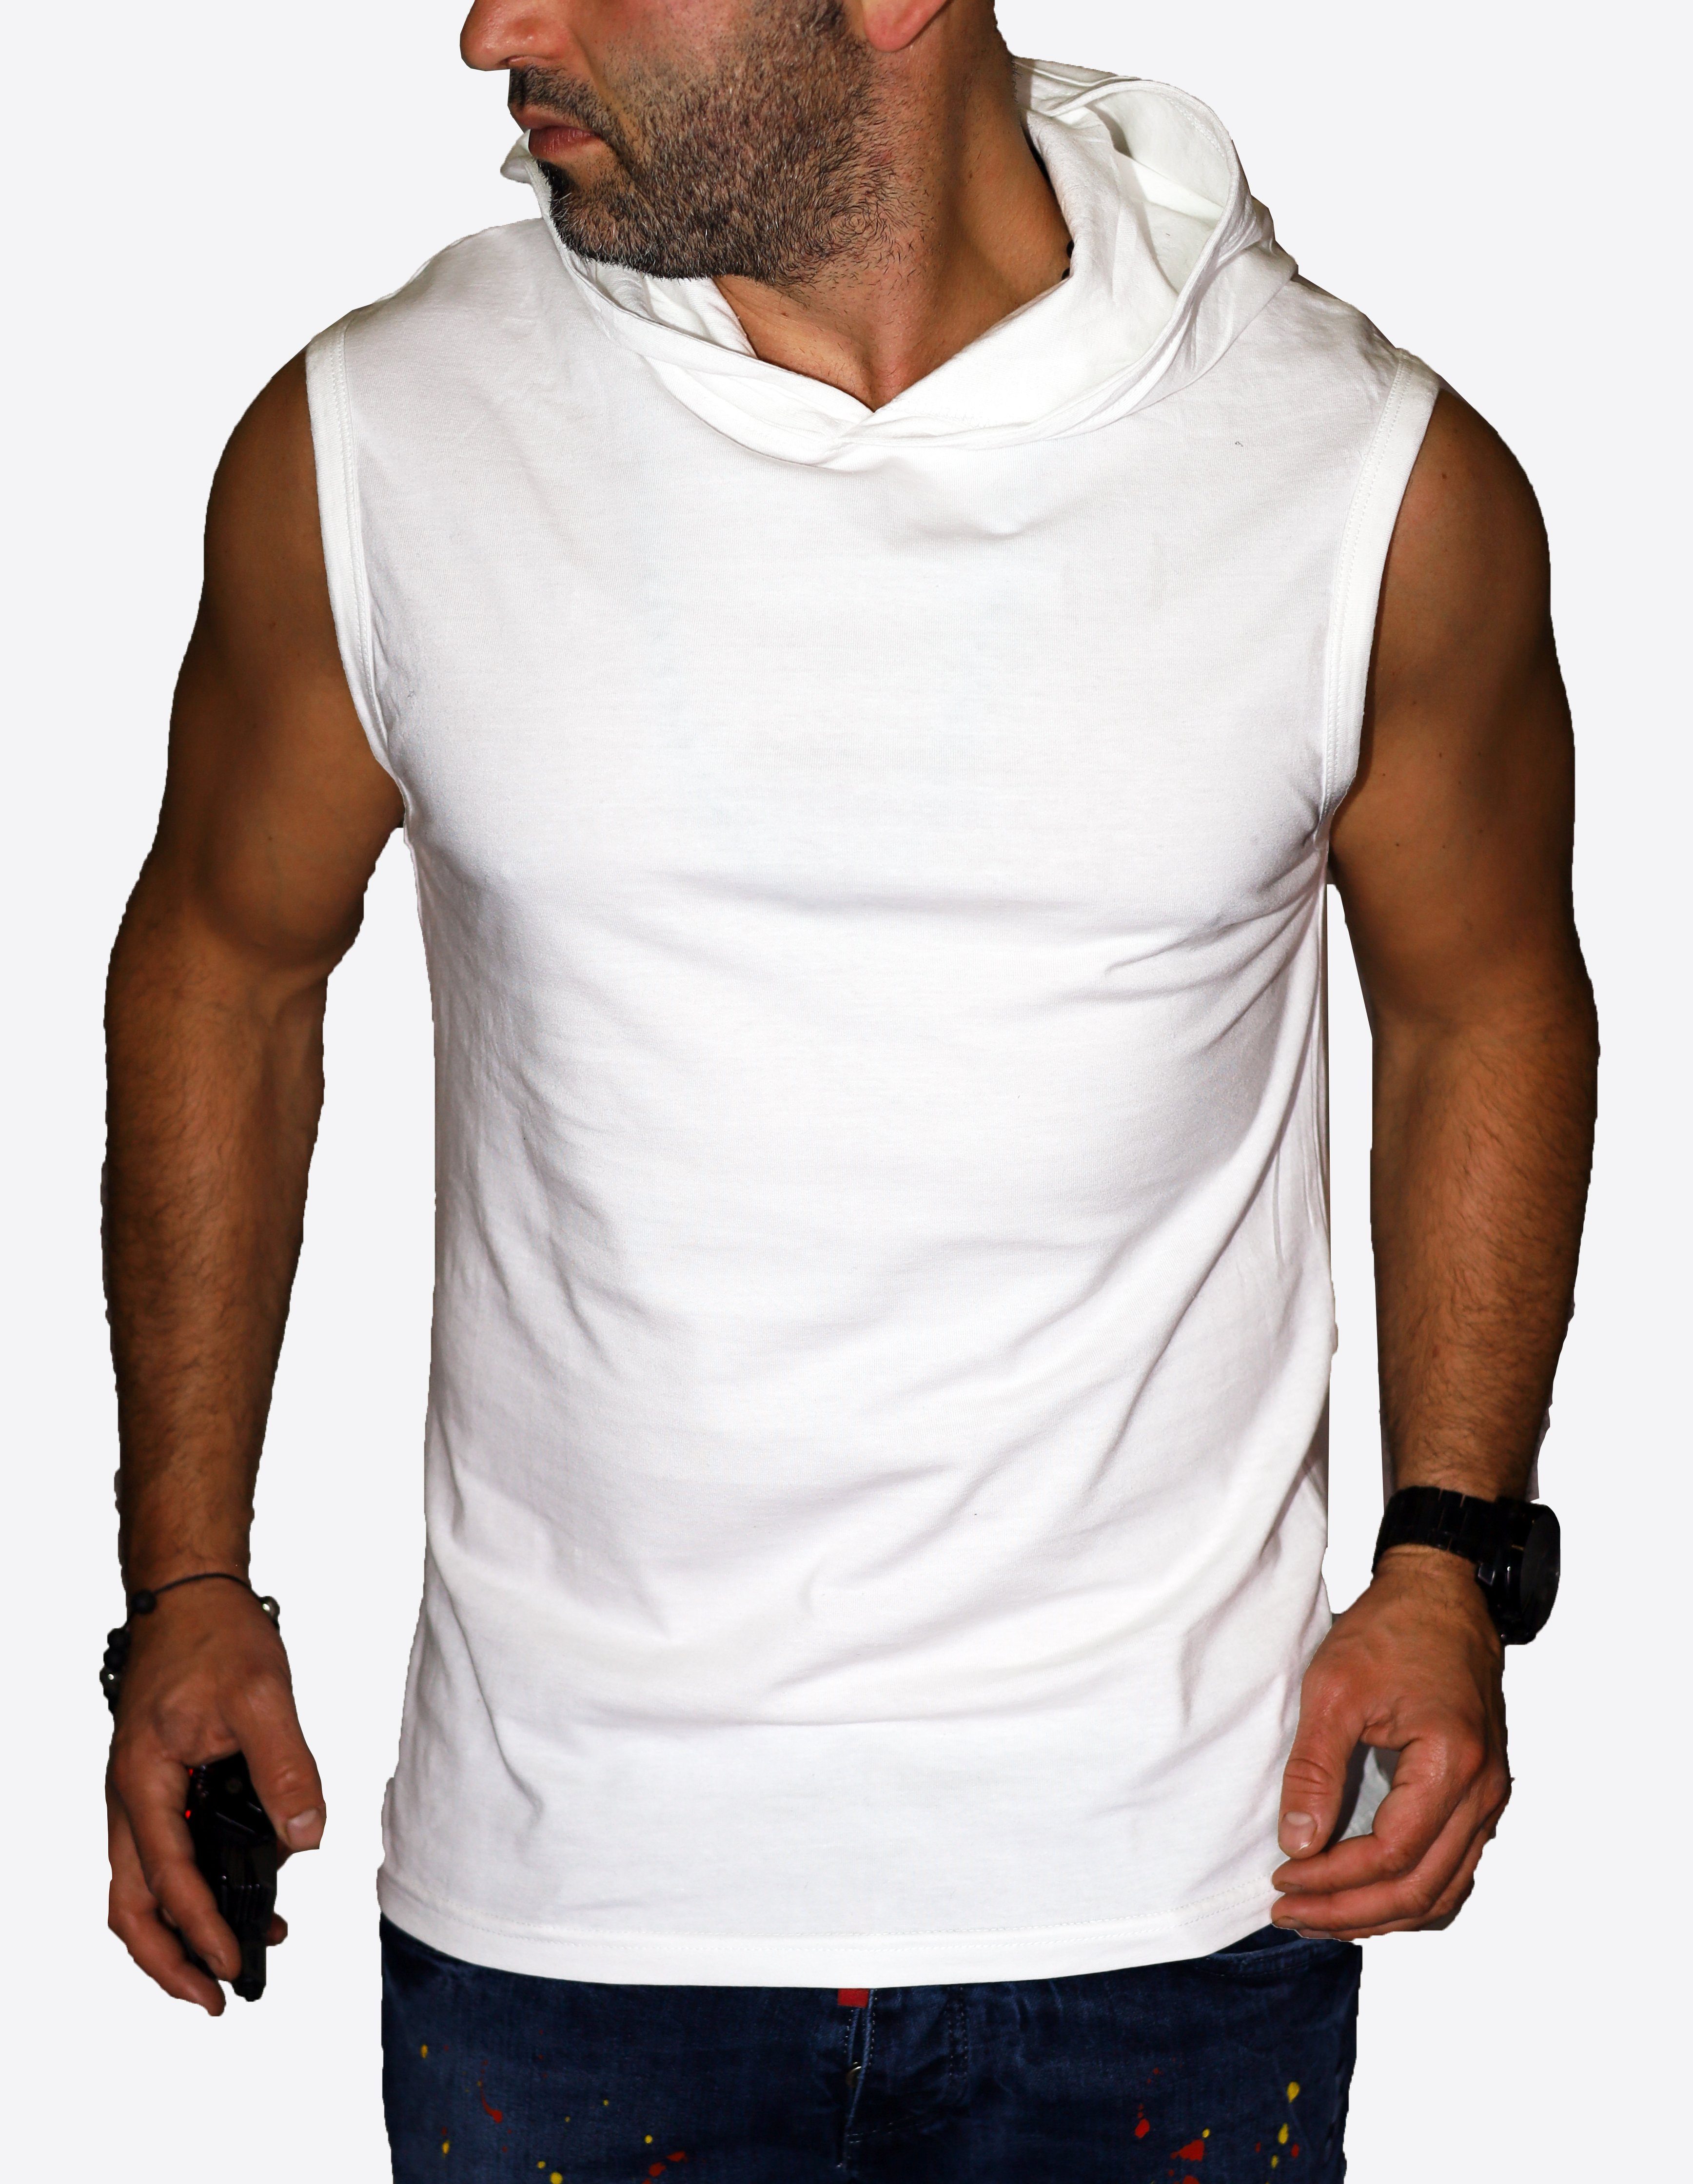 RMK T-Shirt Herren Tanktop Muscleshirt Muskelshirt Gym Rip Shirt Fitness Ärmellos mit Kapuze, in Unifarbe